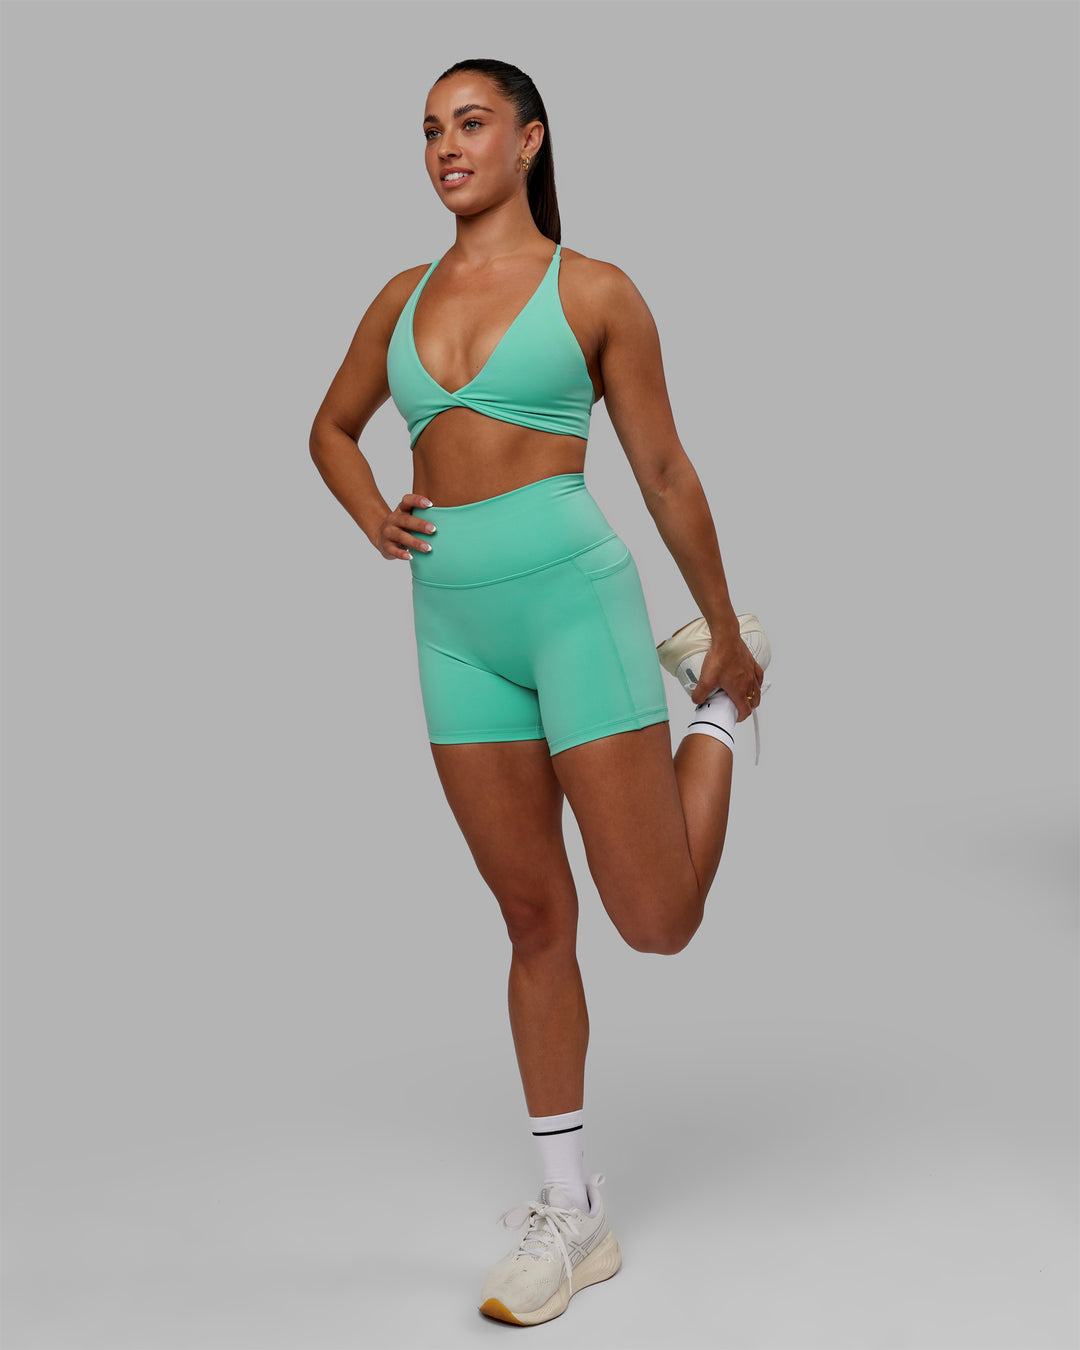 Woman wearing Progression Sports Bra - Aquatic Awe